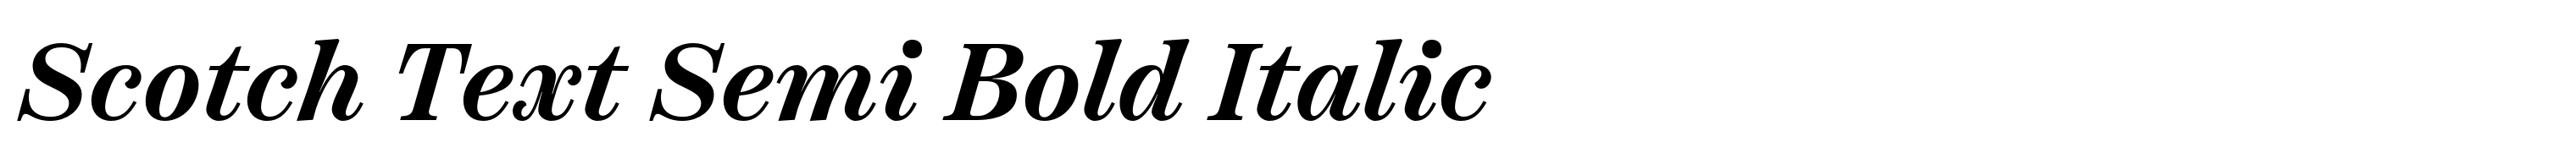 Scotch Text Semi Bold Italic